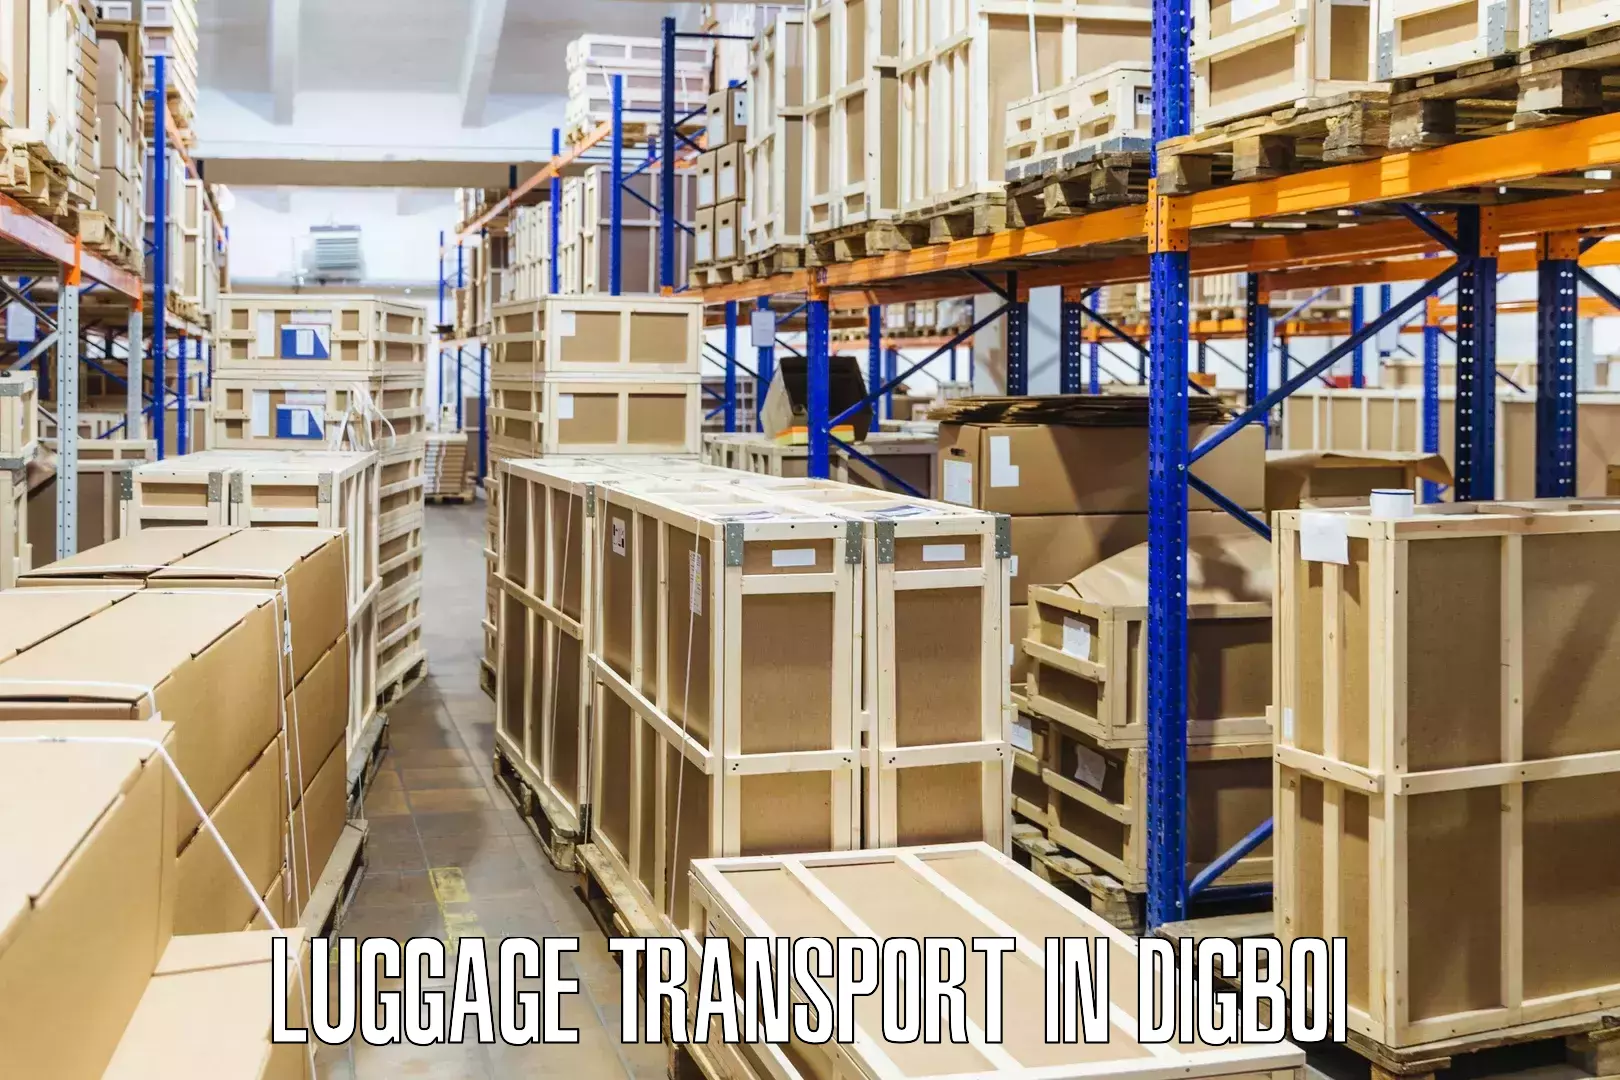 Nationwide luggage transport in Digboi